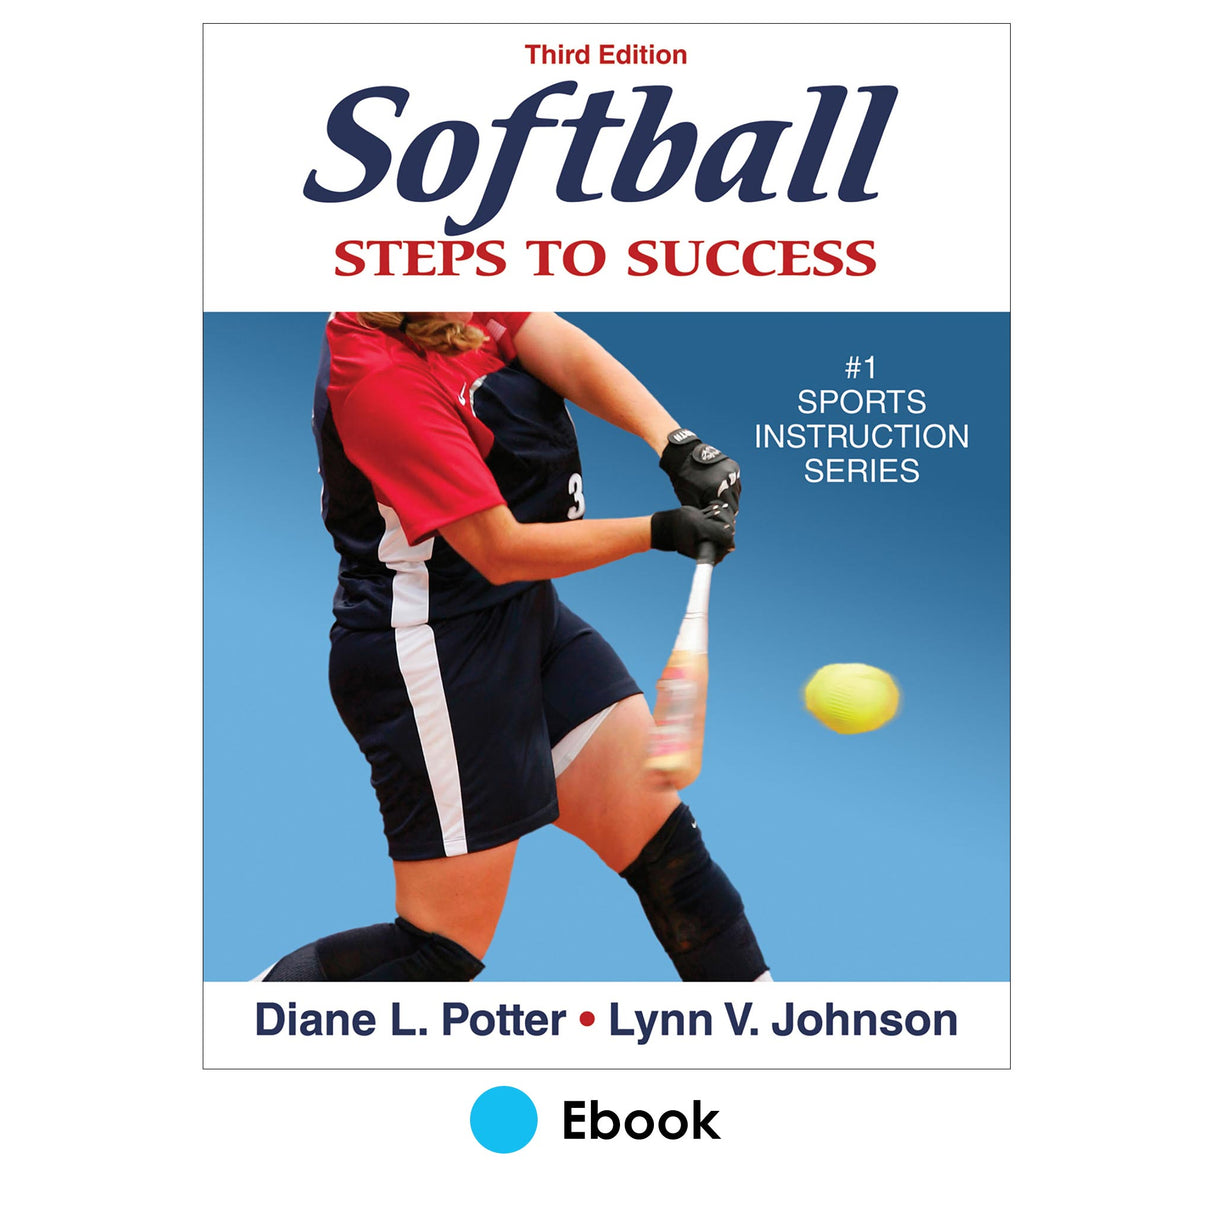 Softball 3rd Edition PDF